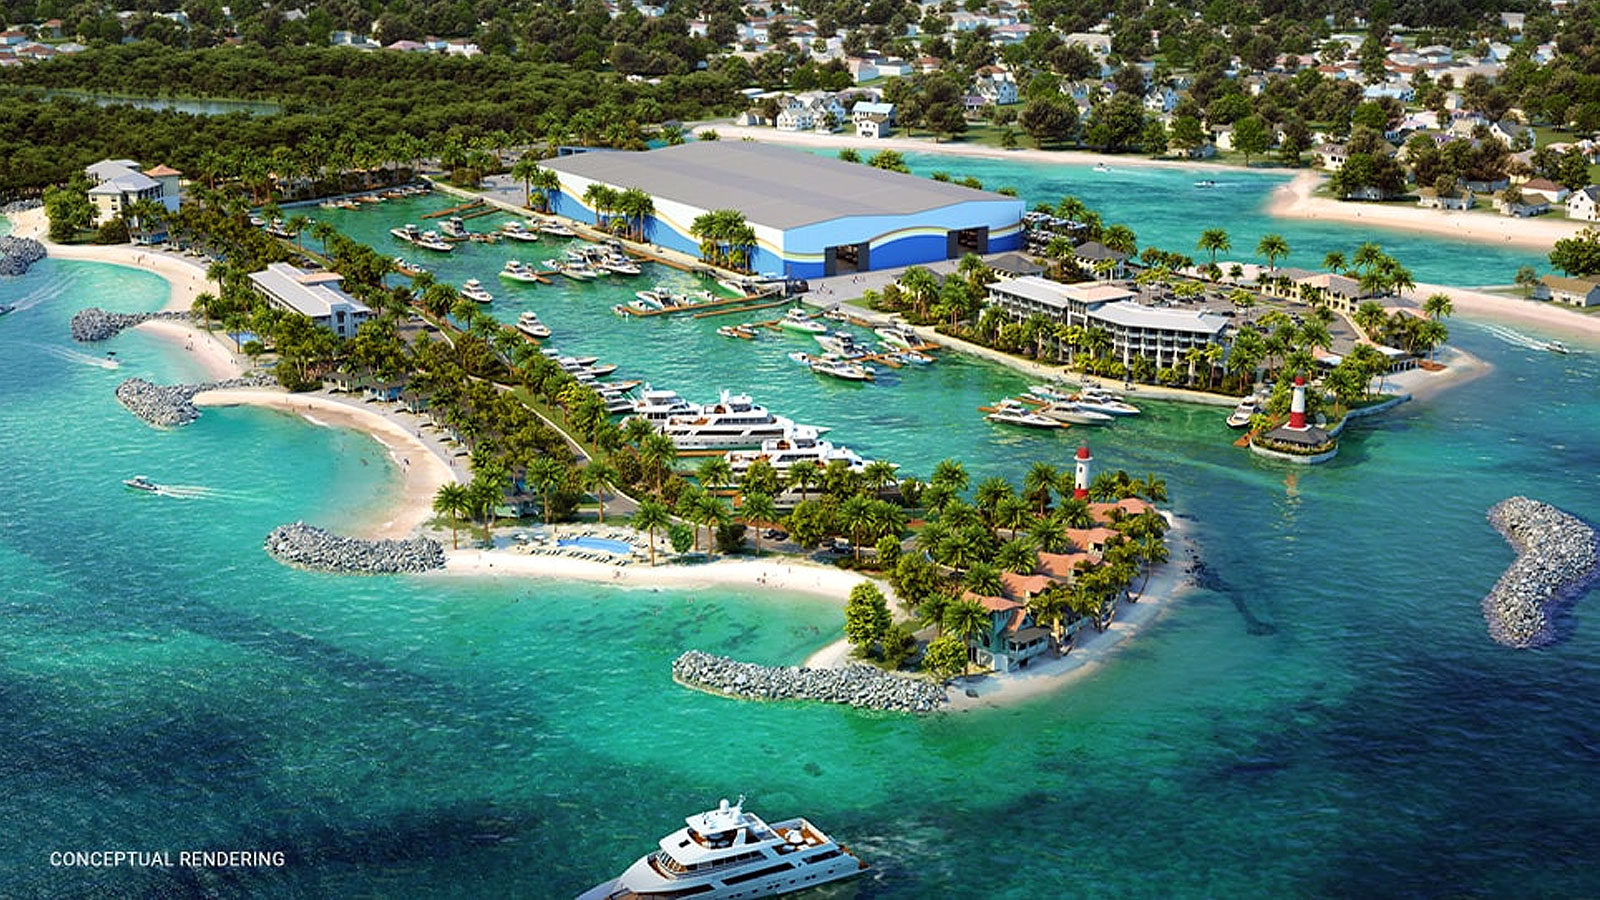 Legendary Marina Resort at Blue Water Cay